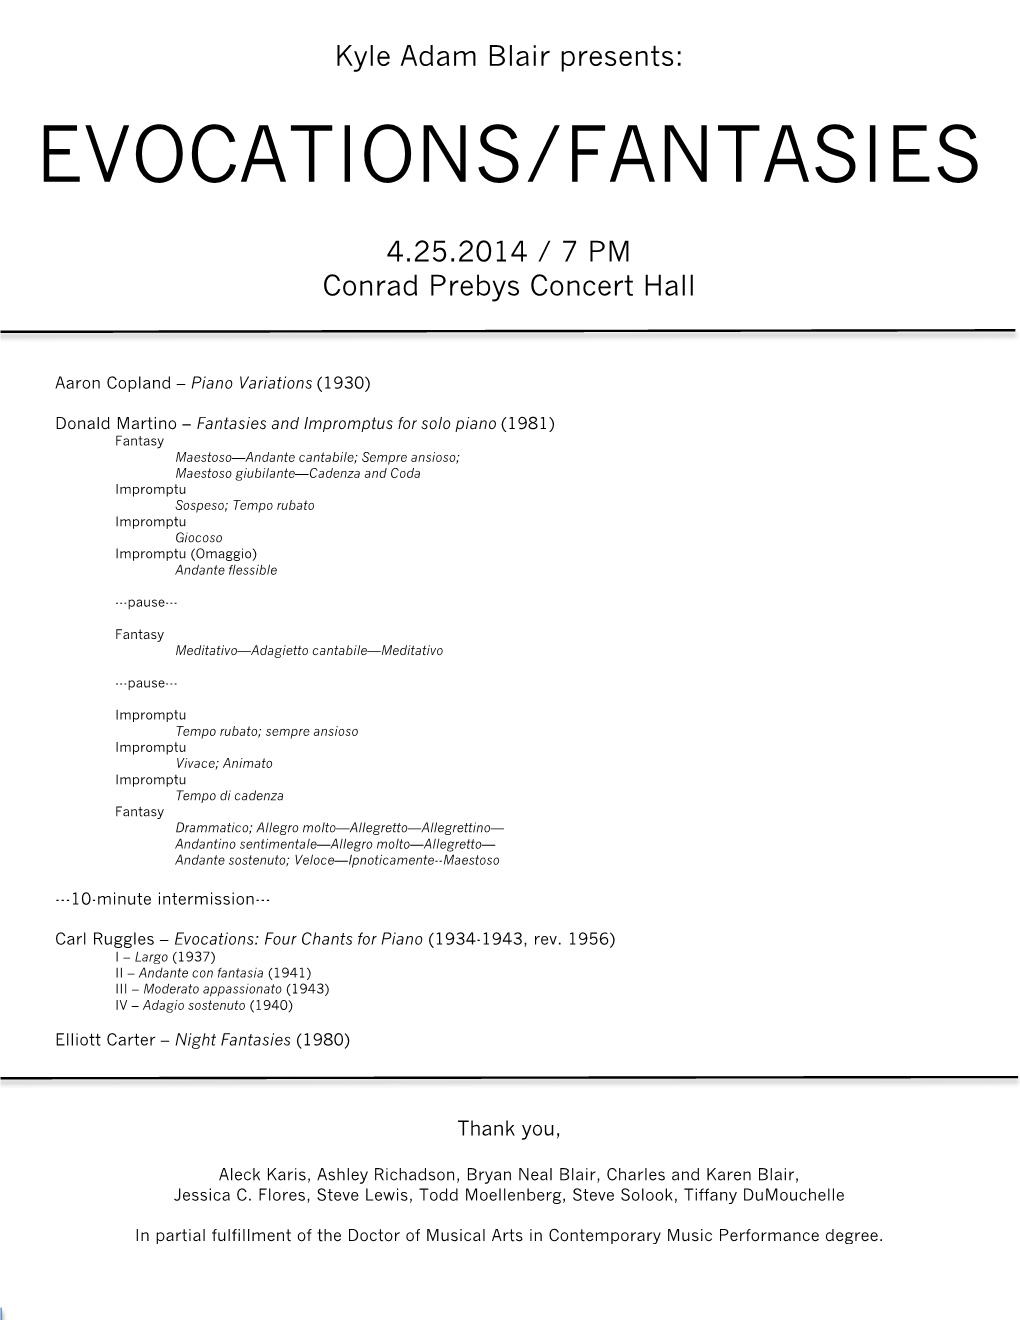 Evocations/Fantasies